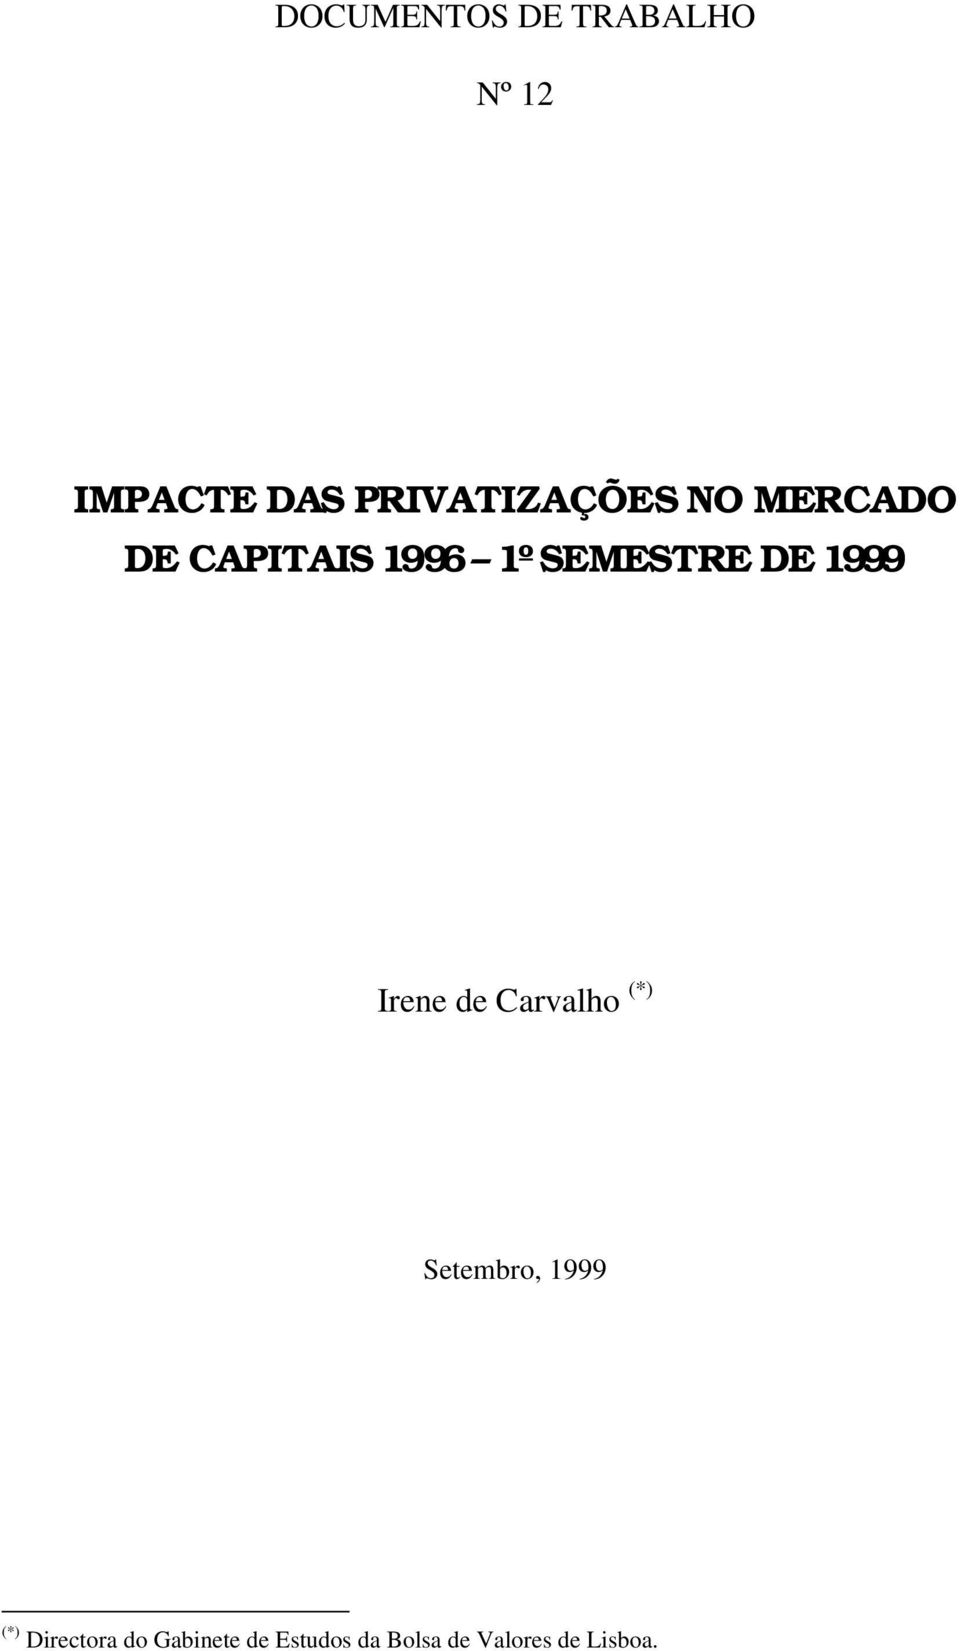 SEMESTRE DE 1999 Irene de Carvalho (*) Setembro,